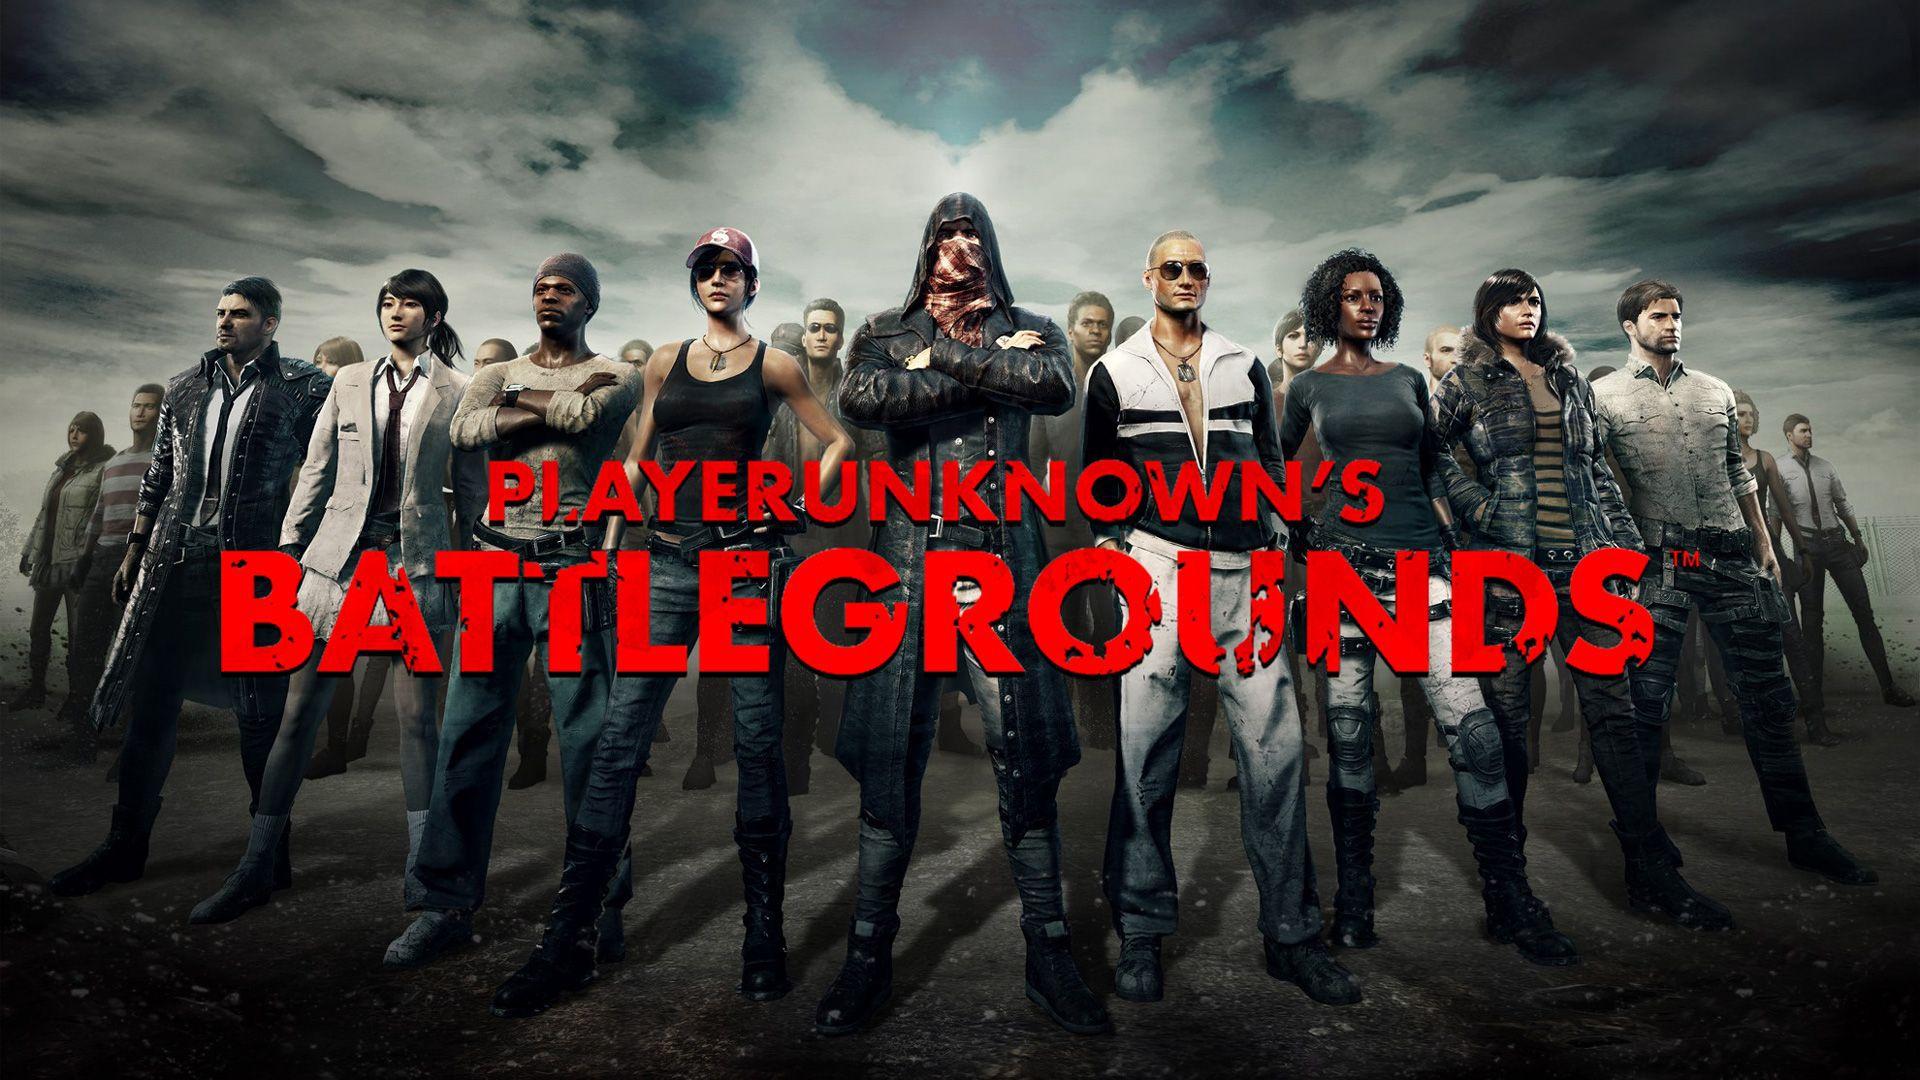 PlayerUnknown's Battlegrounds: PUBG Wallpaper and Photo 4K Full HD